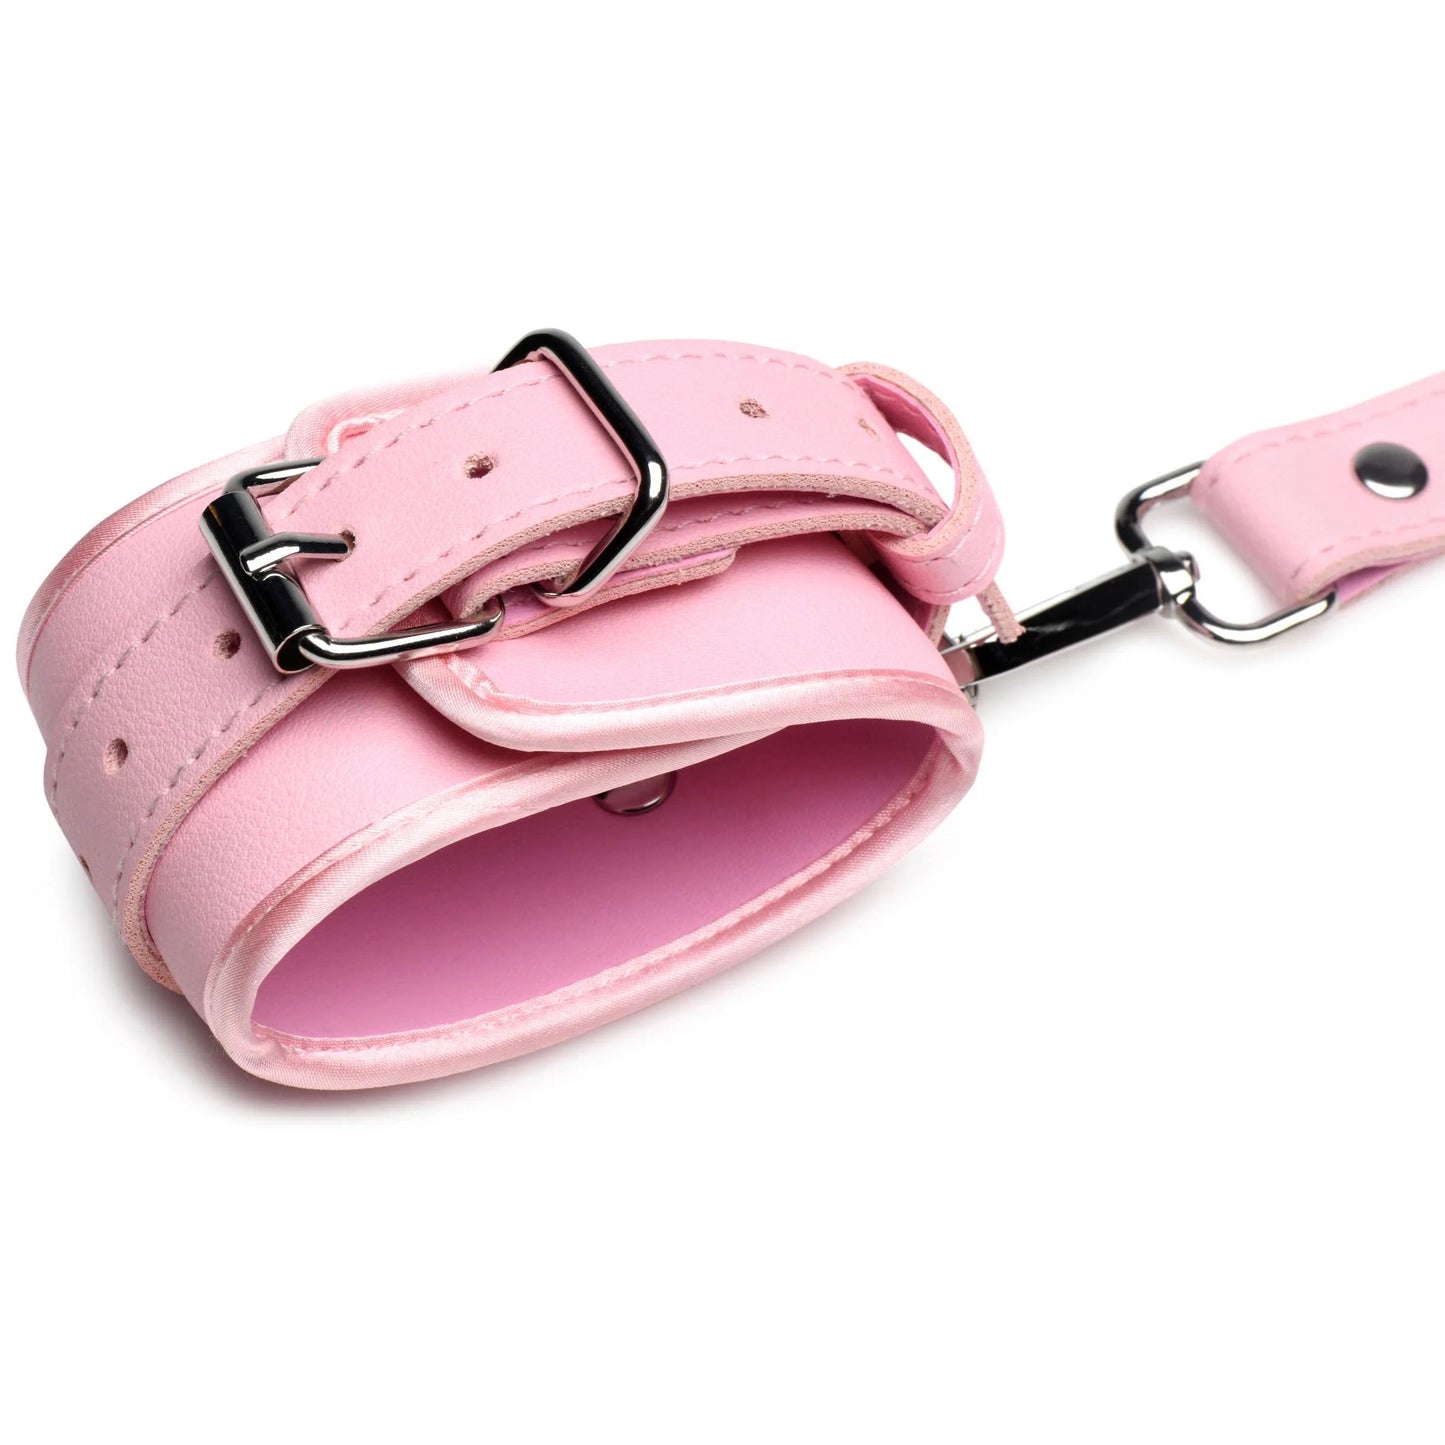 Bondage Harness With Bows - Medium/large - Pink